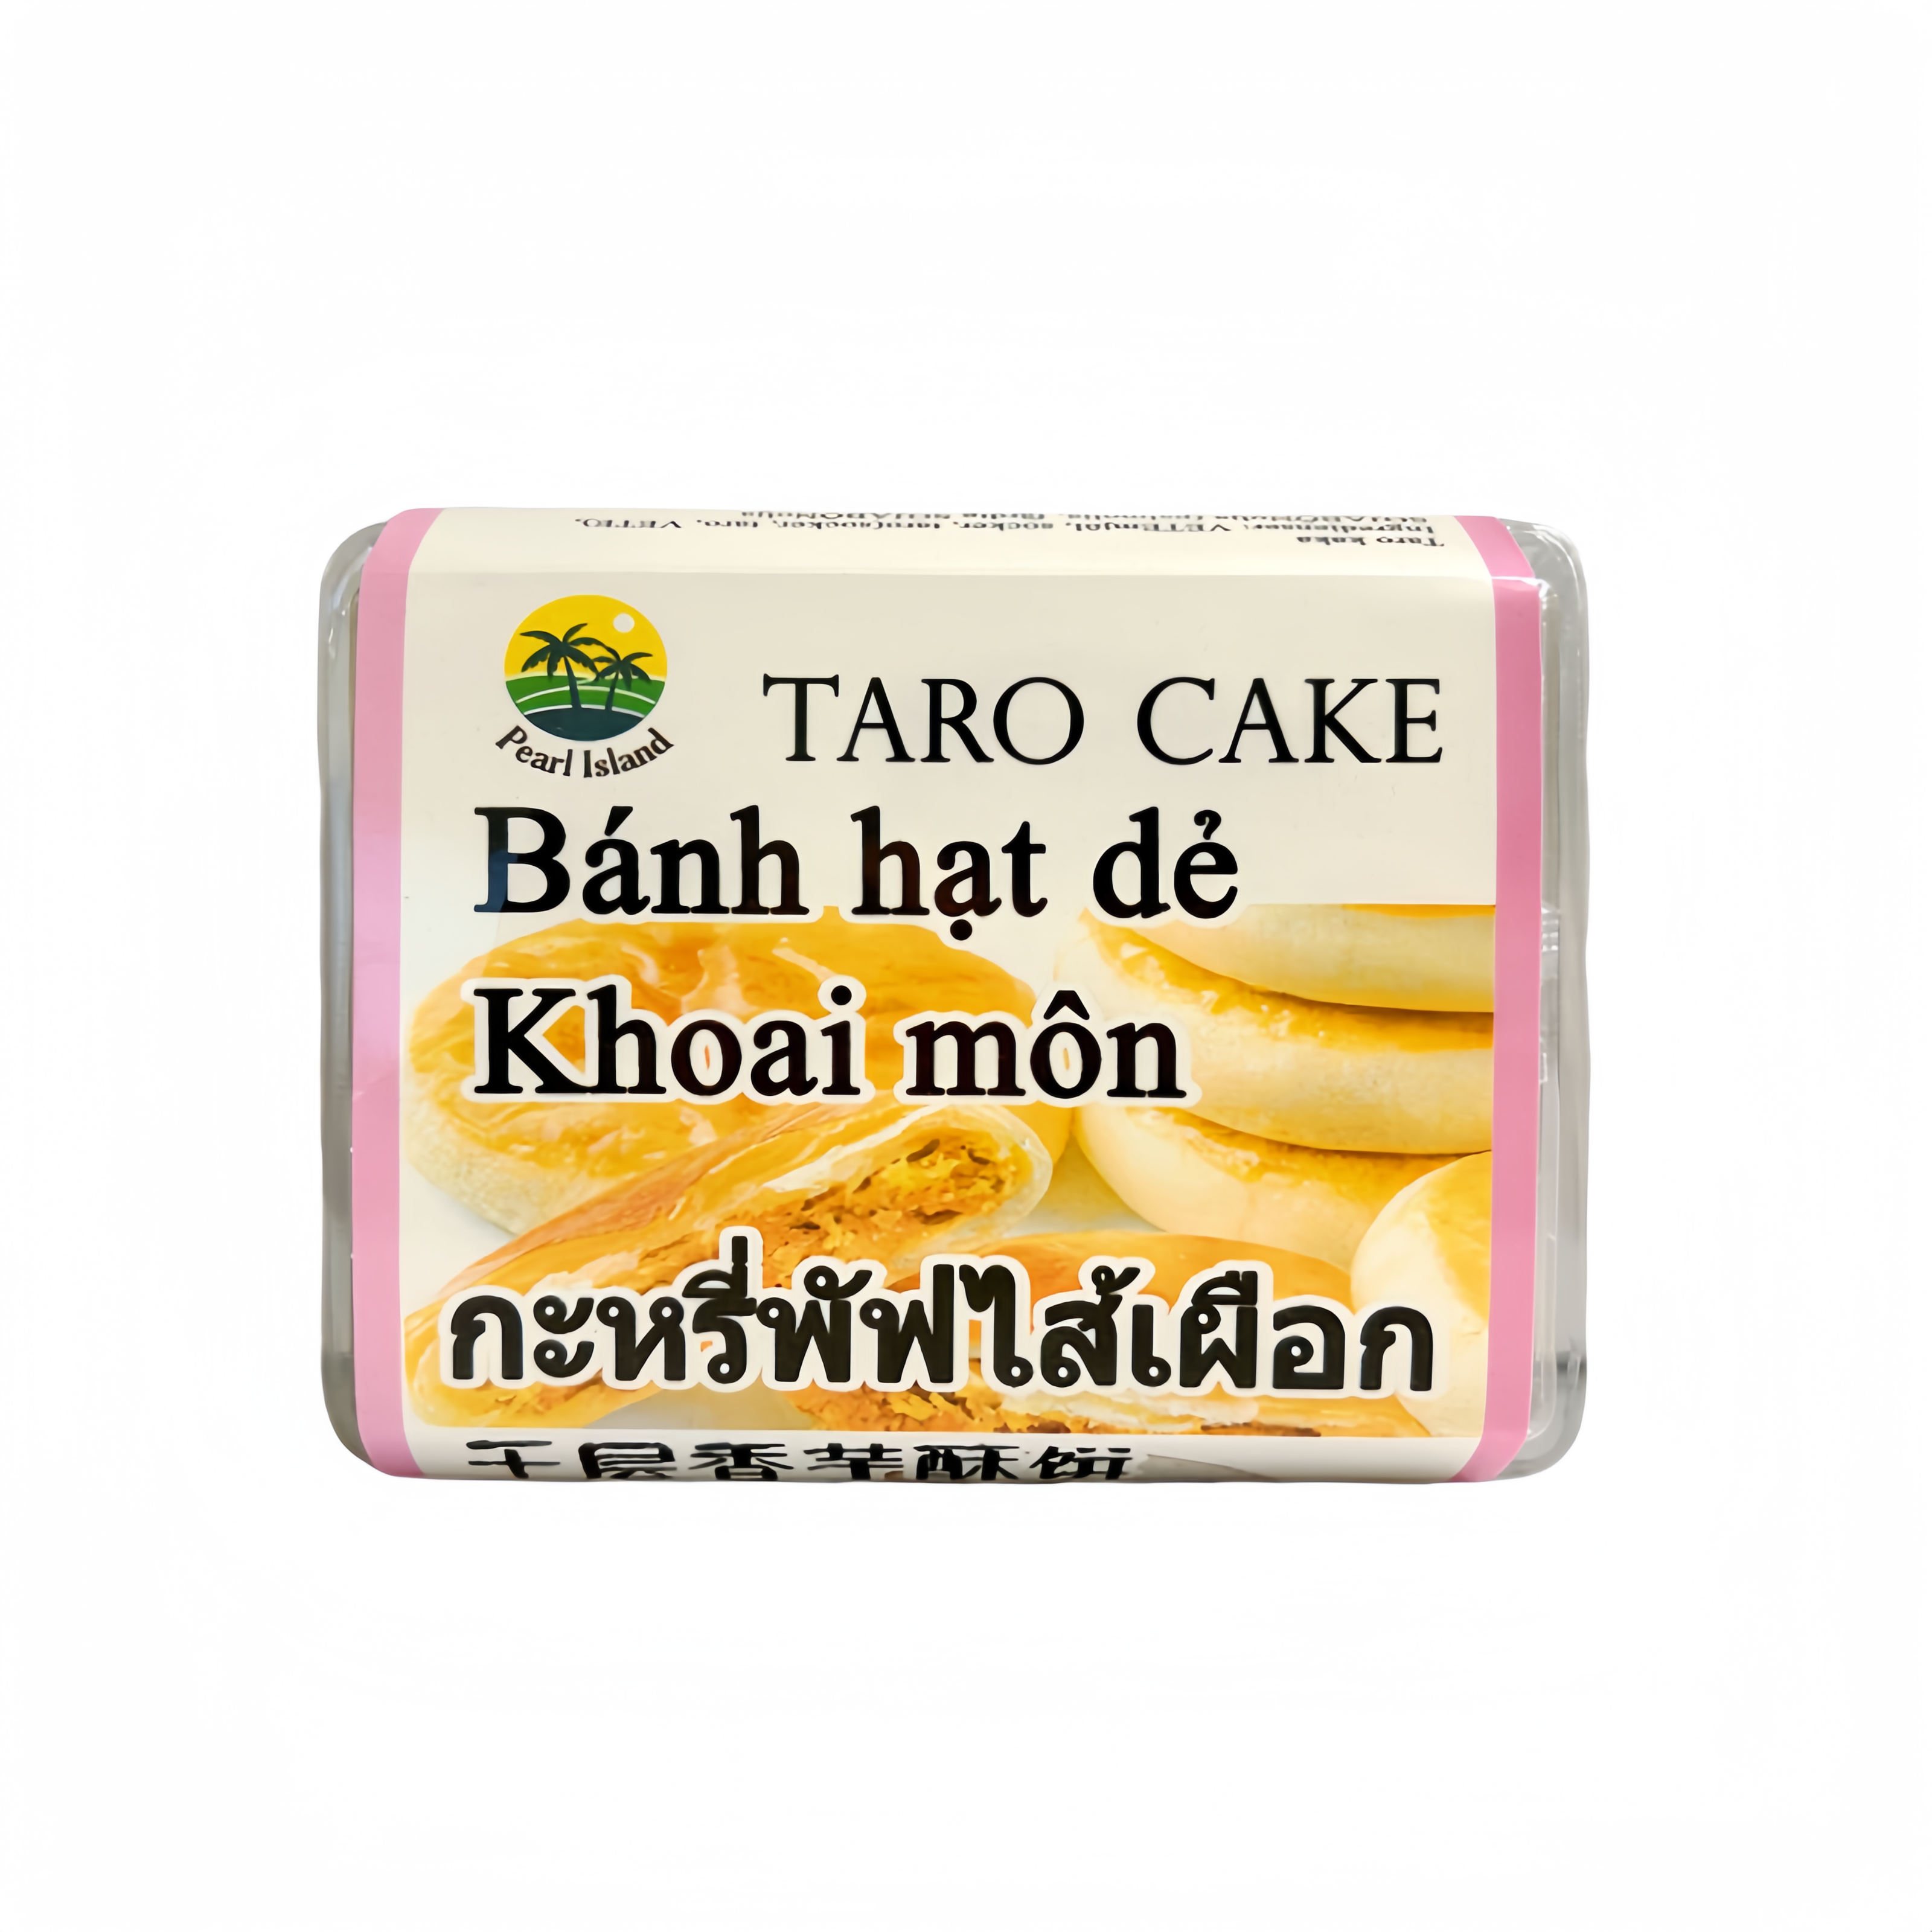 Cake Taro flavor 400g Pearl Island China